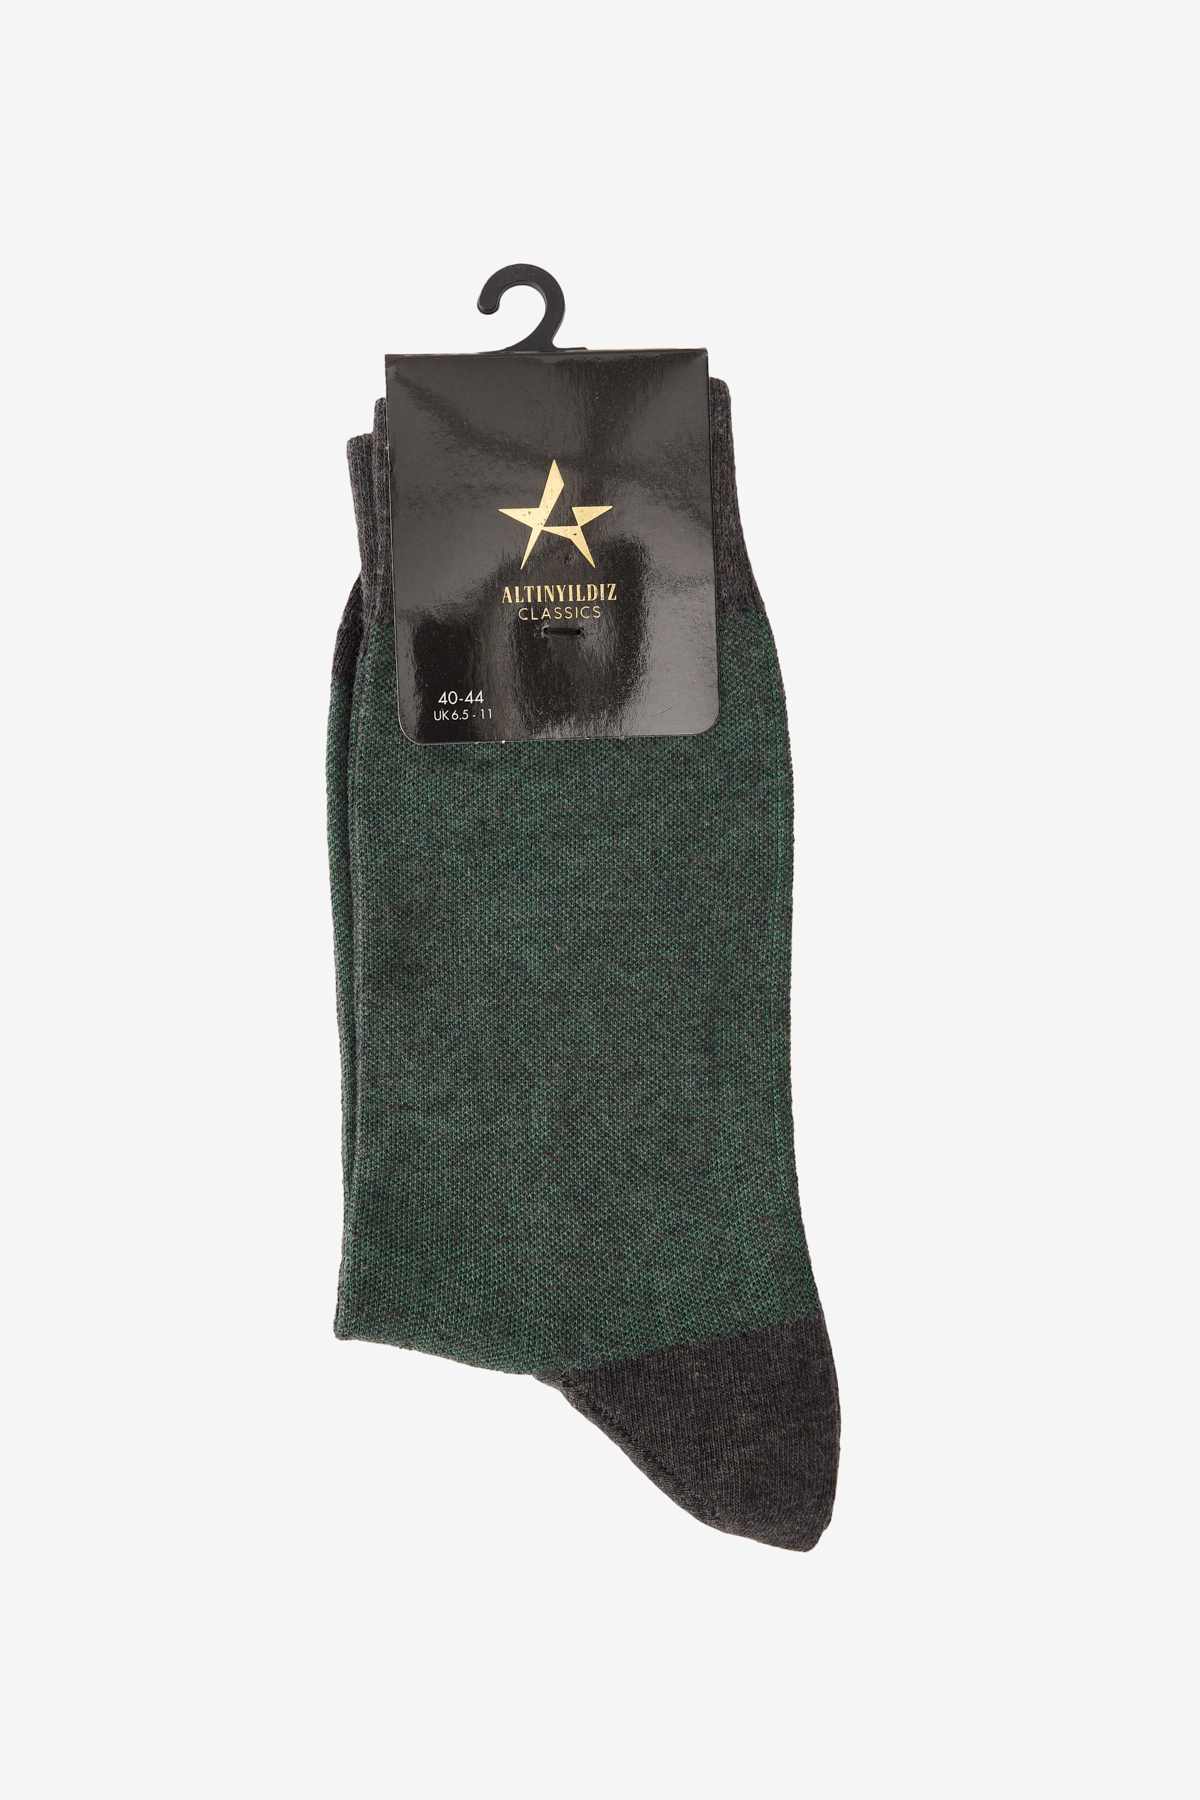 ALTINYILDIZ CLASSICS Men's Anthracite-Khaki Patterned Bamboo Cleat Socks